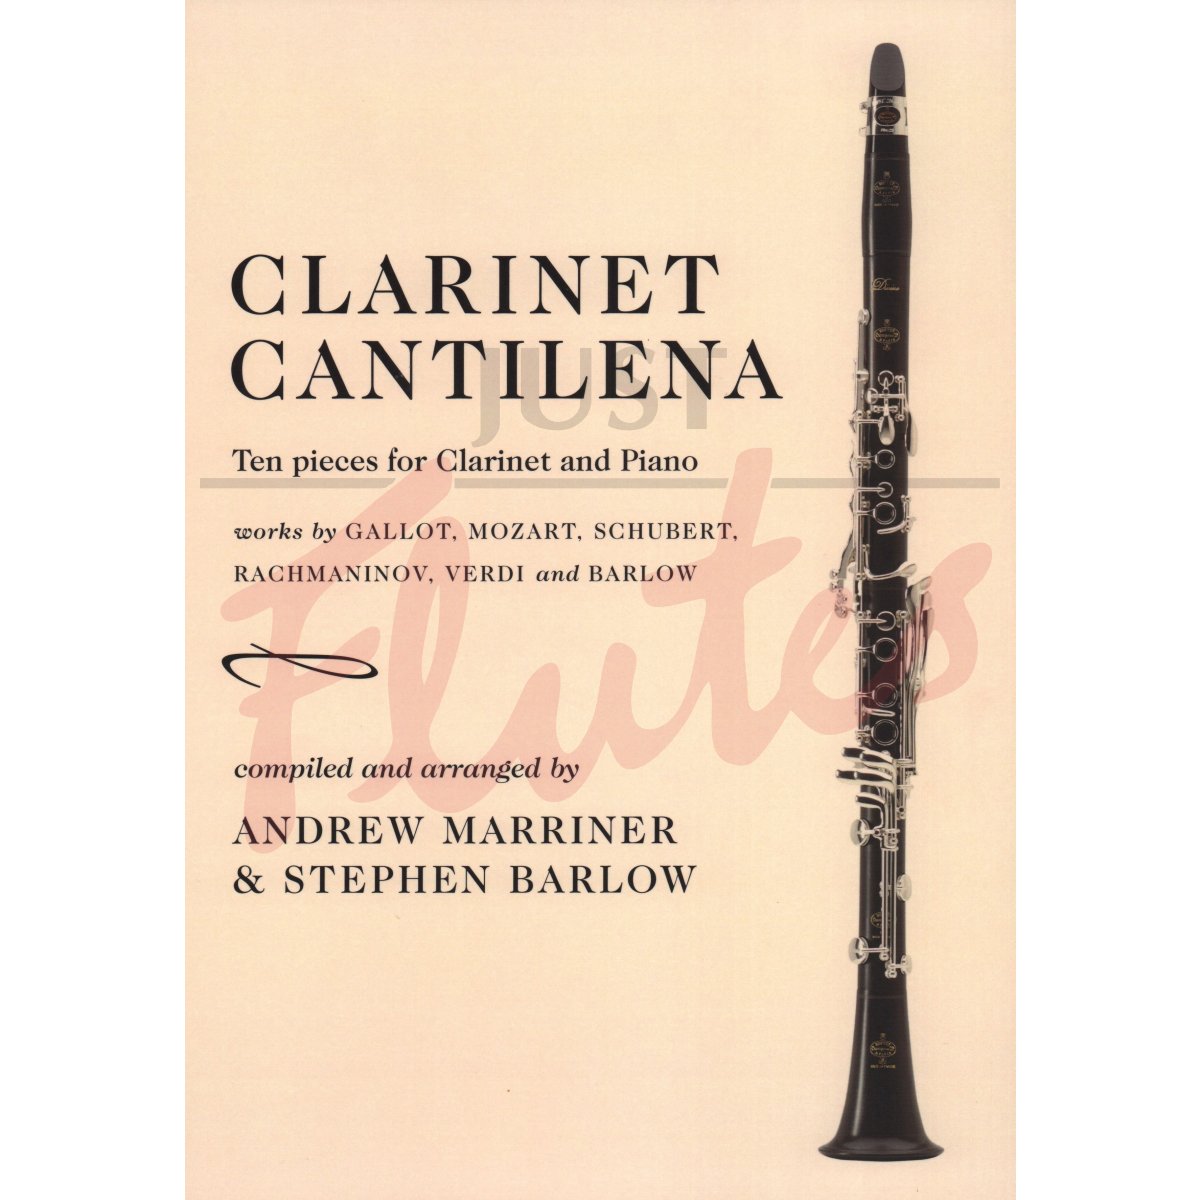 Clarinet Cantilena for Clarinet and Piano